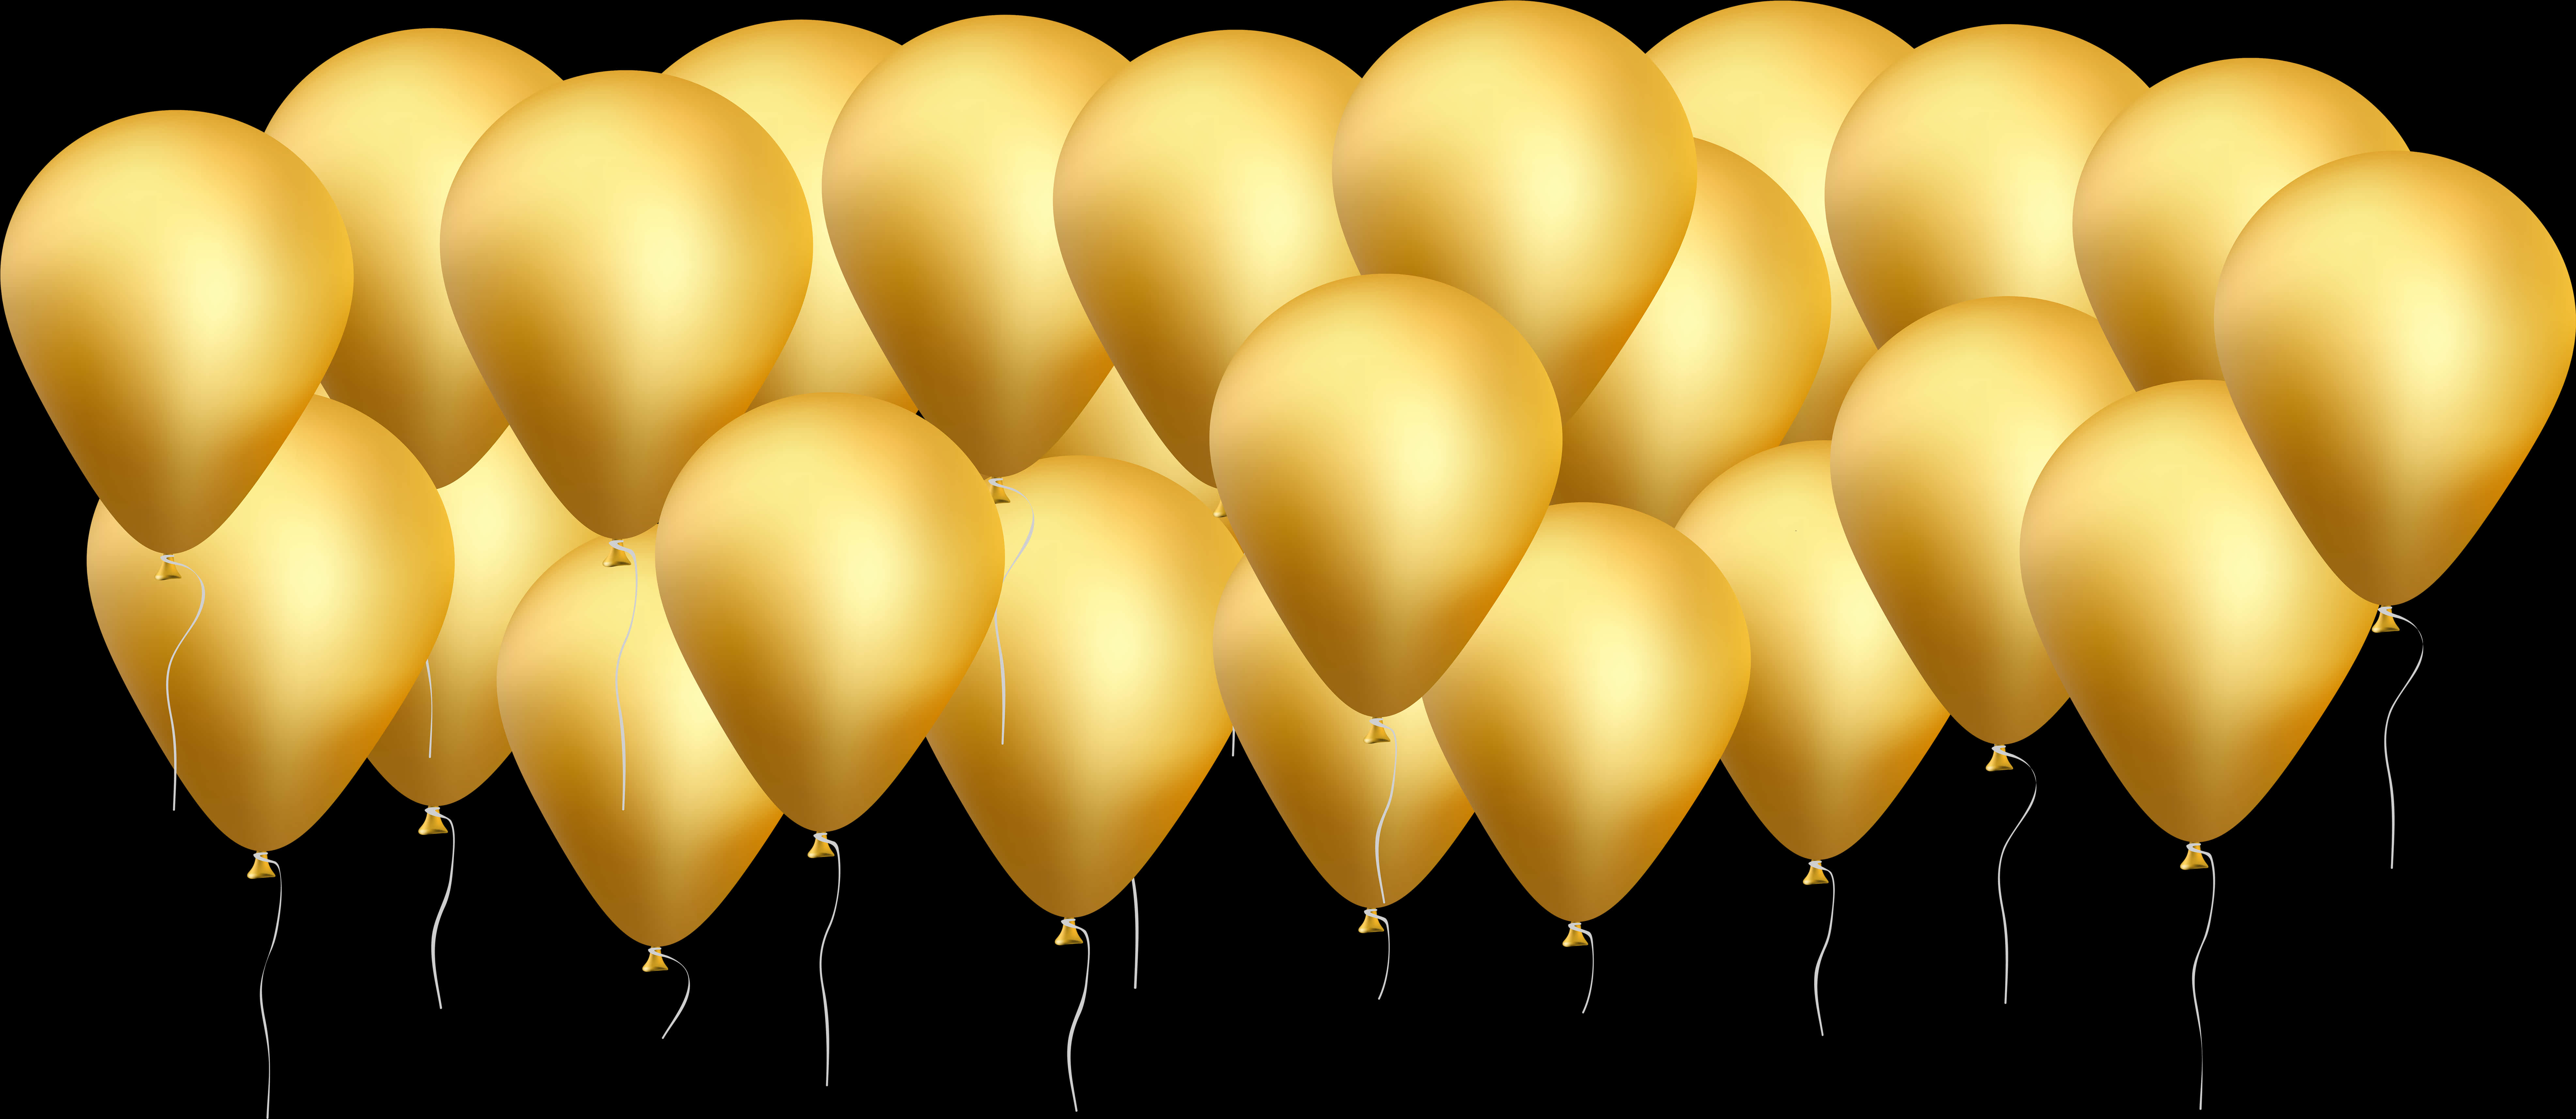 Golden Balloons Celebration Background PNG